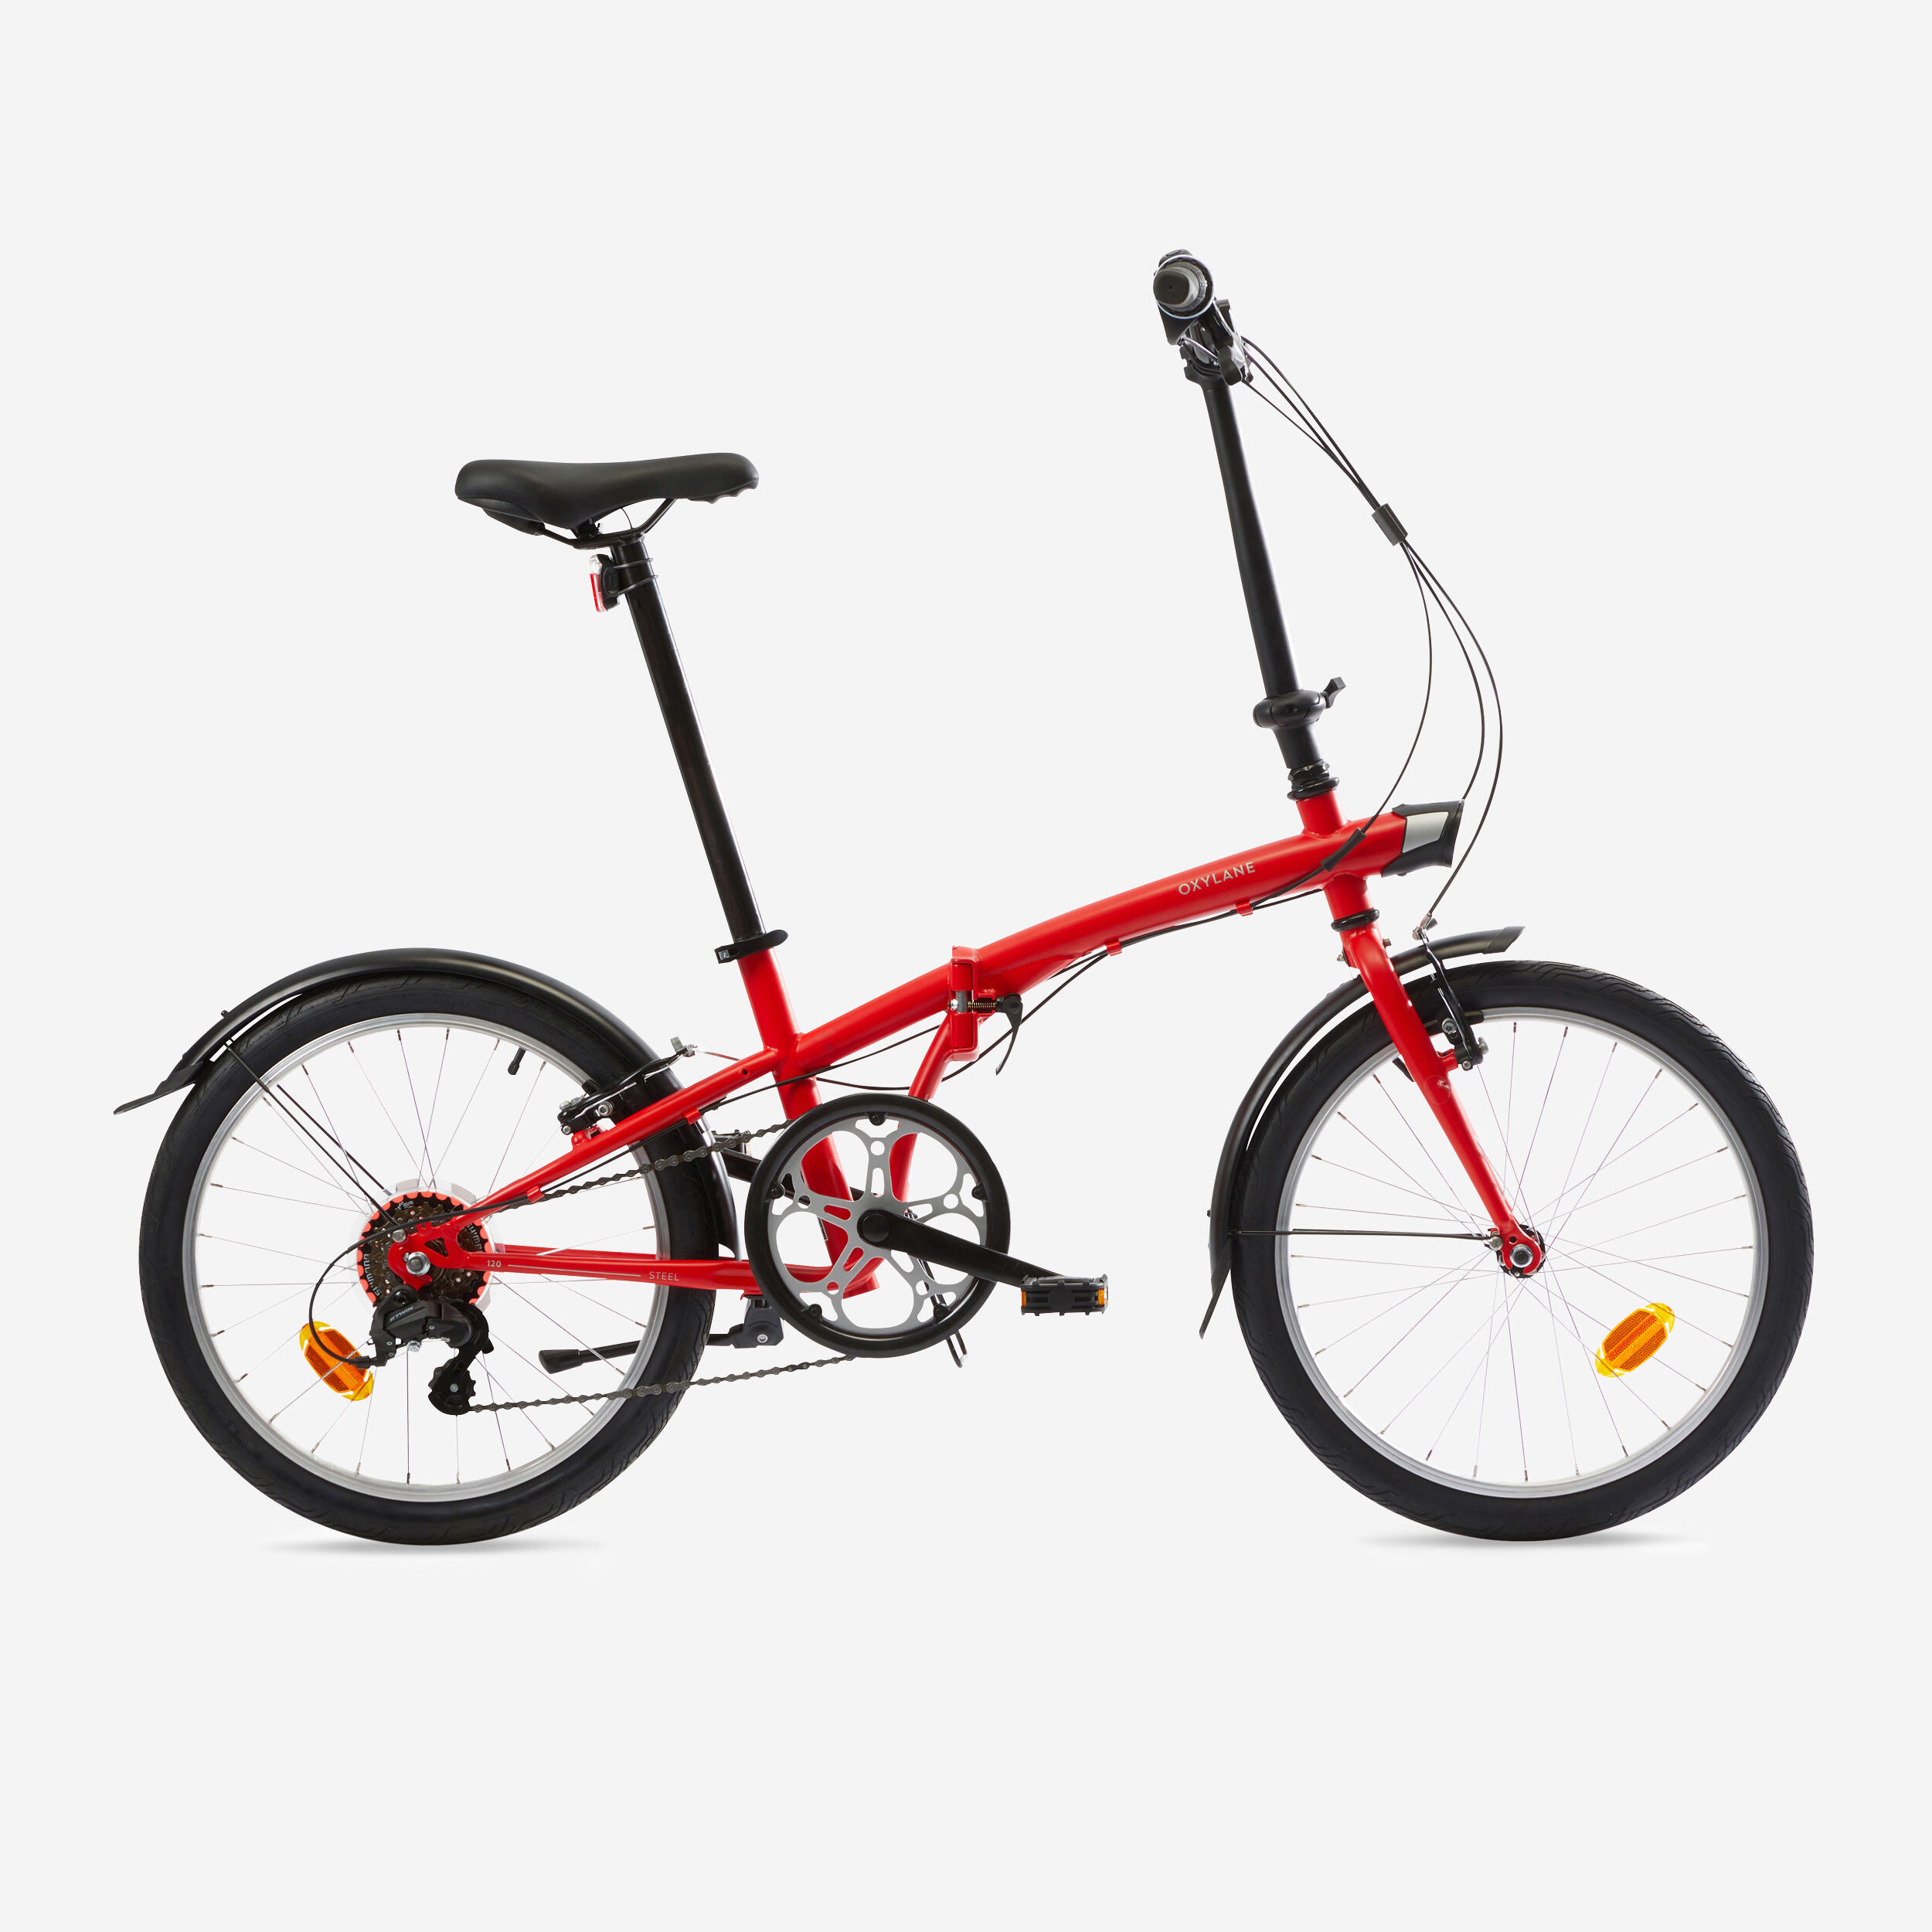 BTWIN Tilt 120 folding bike - red